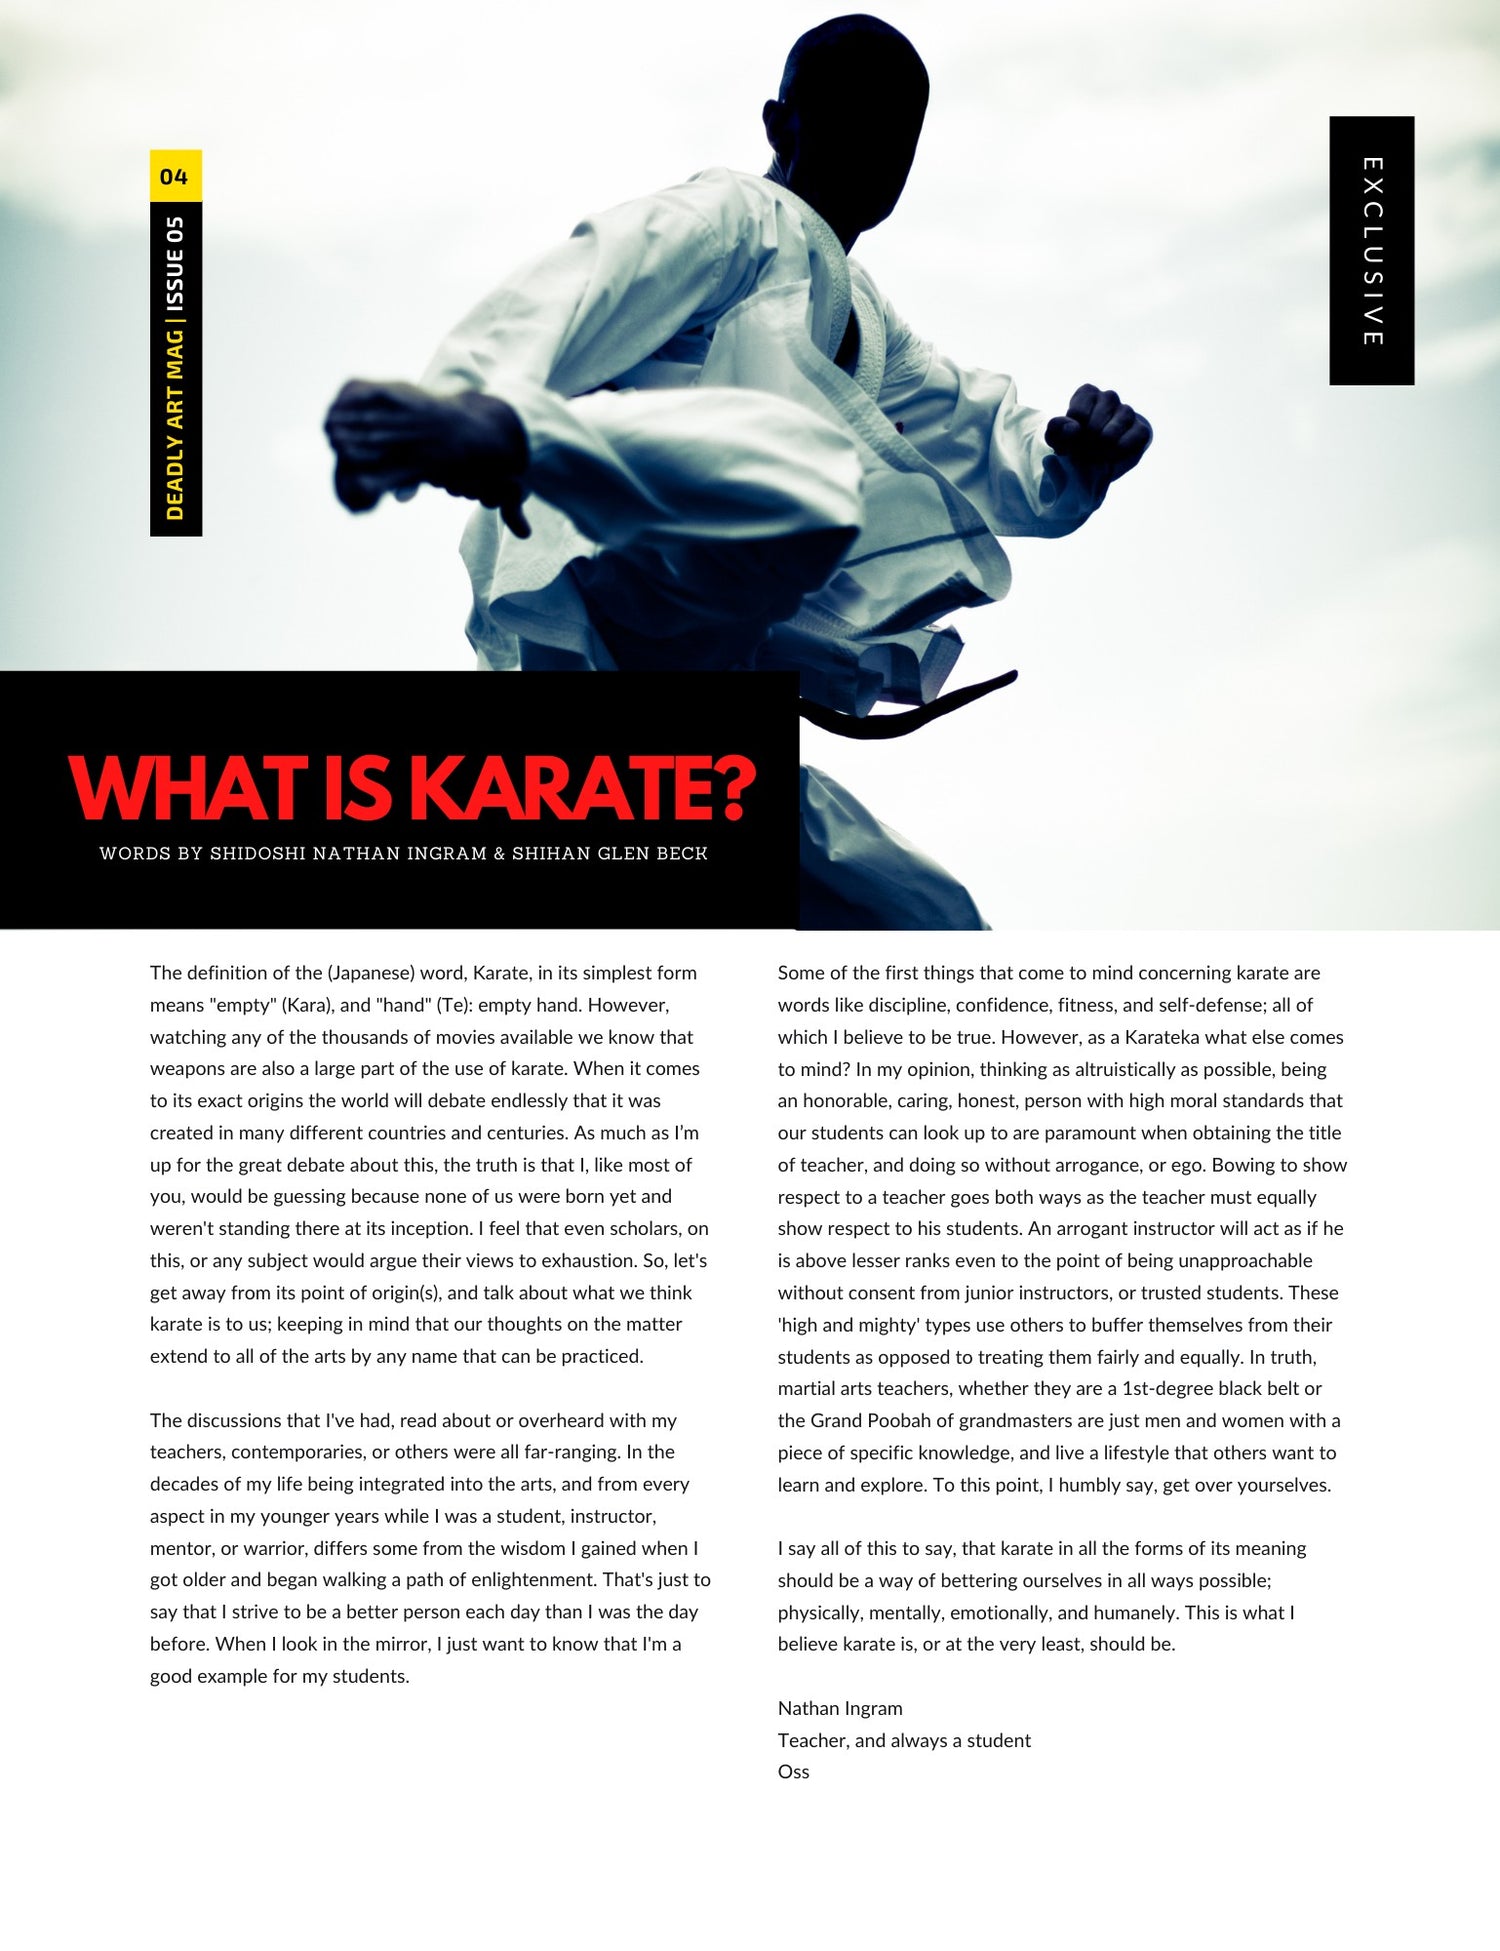 (DIGITAL VERSION ONLY) Deadly Art of Survival Magazine 5th Edition: Collector's Series #1 Martial Arts Magazine Worldwide deadlyartofsurvival.com